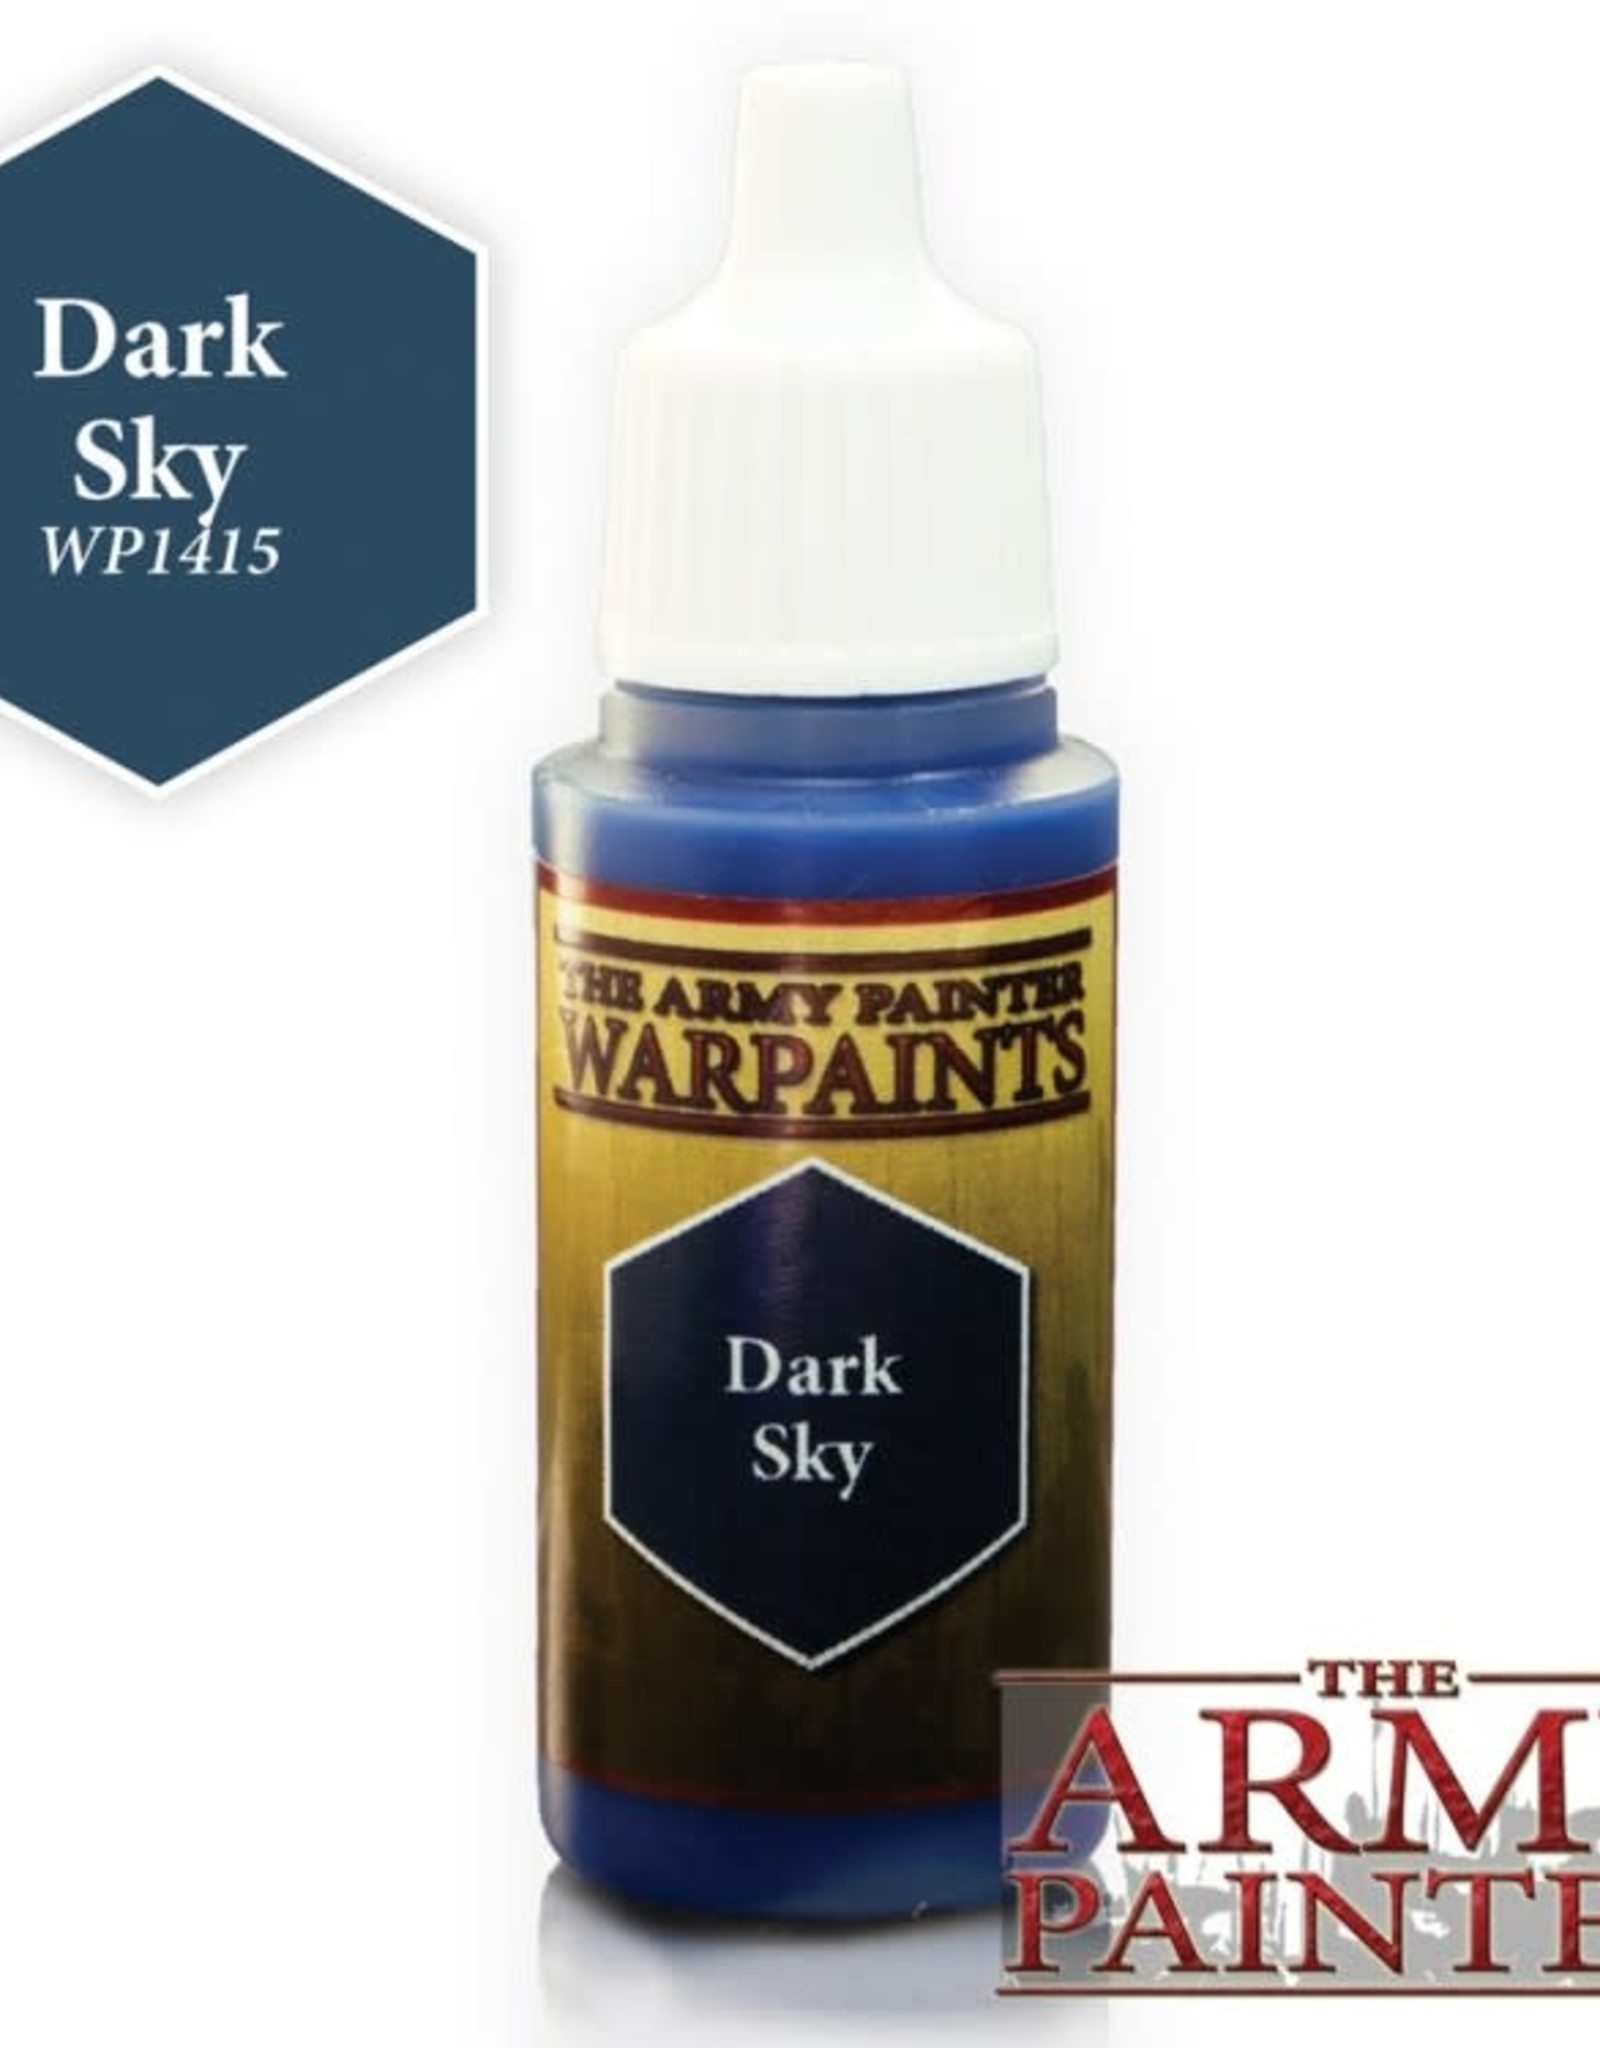 The Army Painter Warpaints - Dark Sky